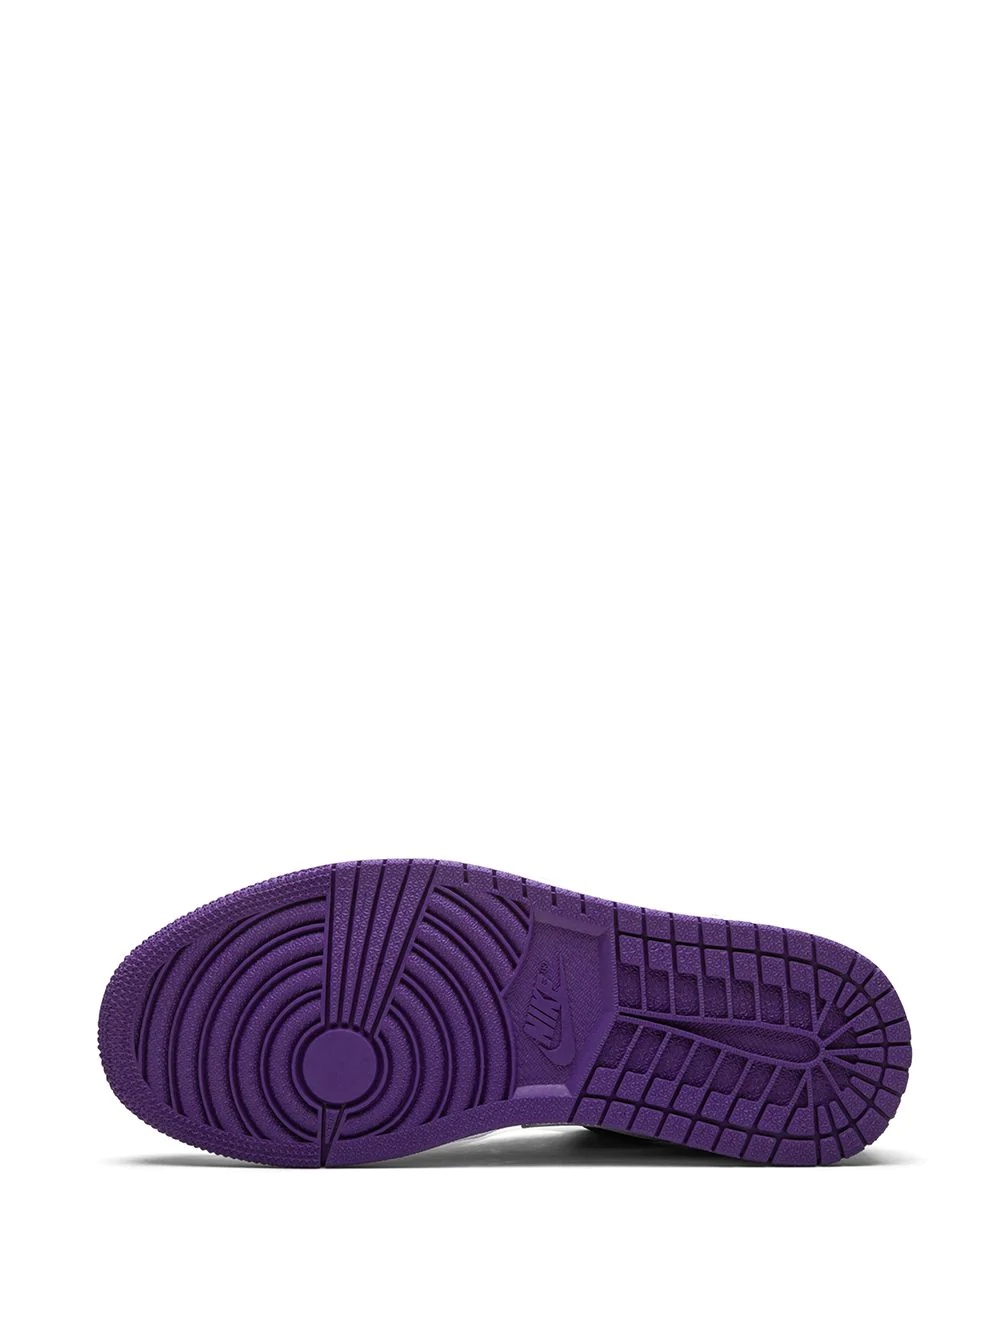 Air Jordan 1 Low "Court Purple" sneakers - 4